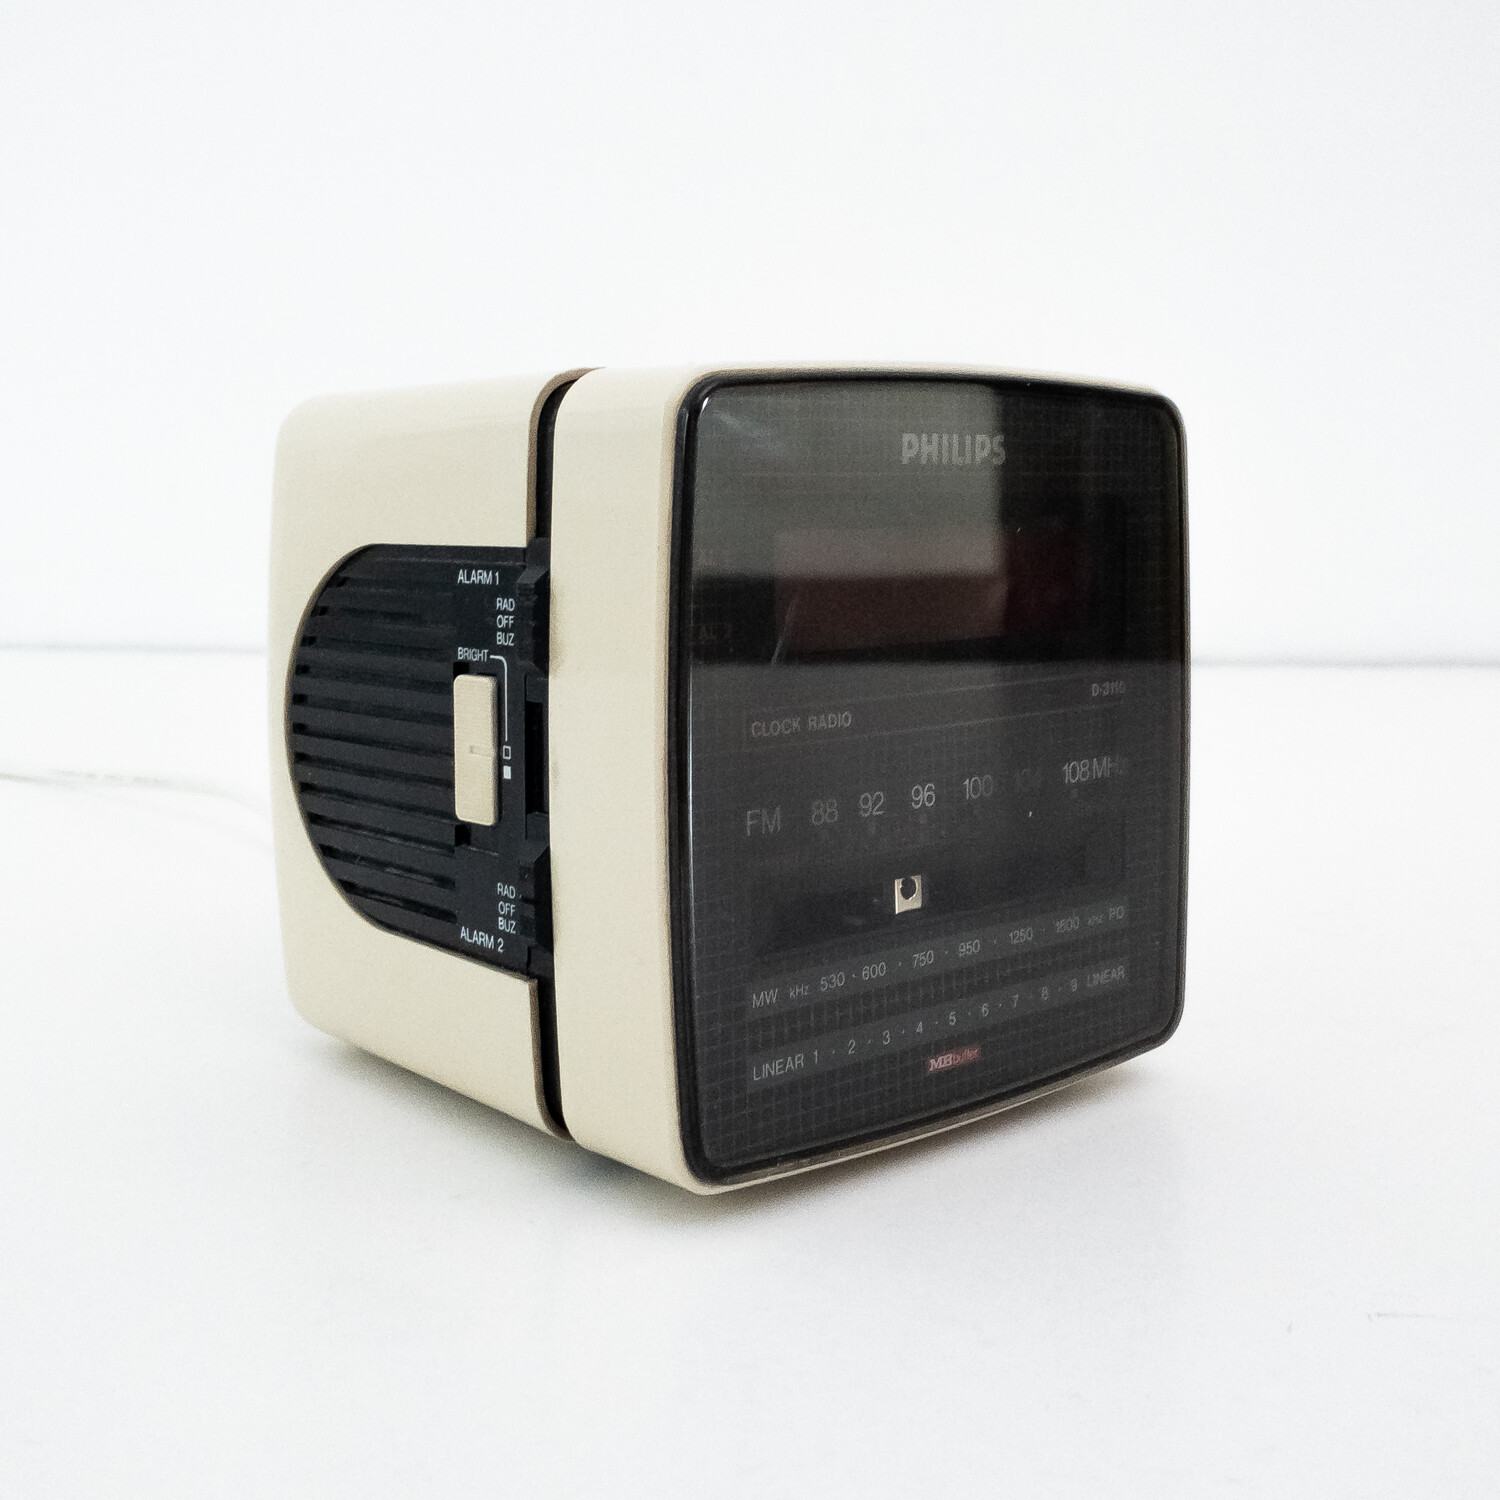 Philips Mb Buffer cube clock radio Mod. D3110 / 08